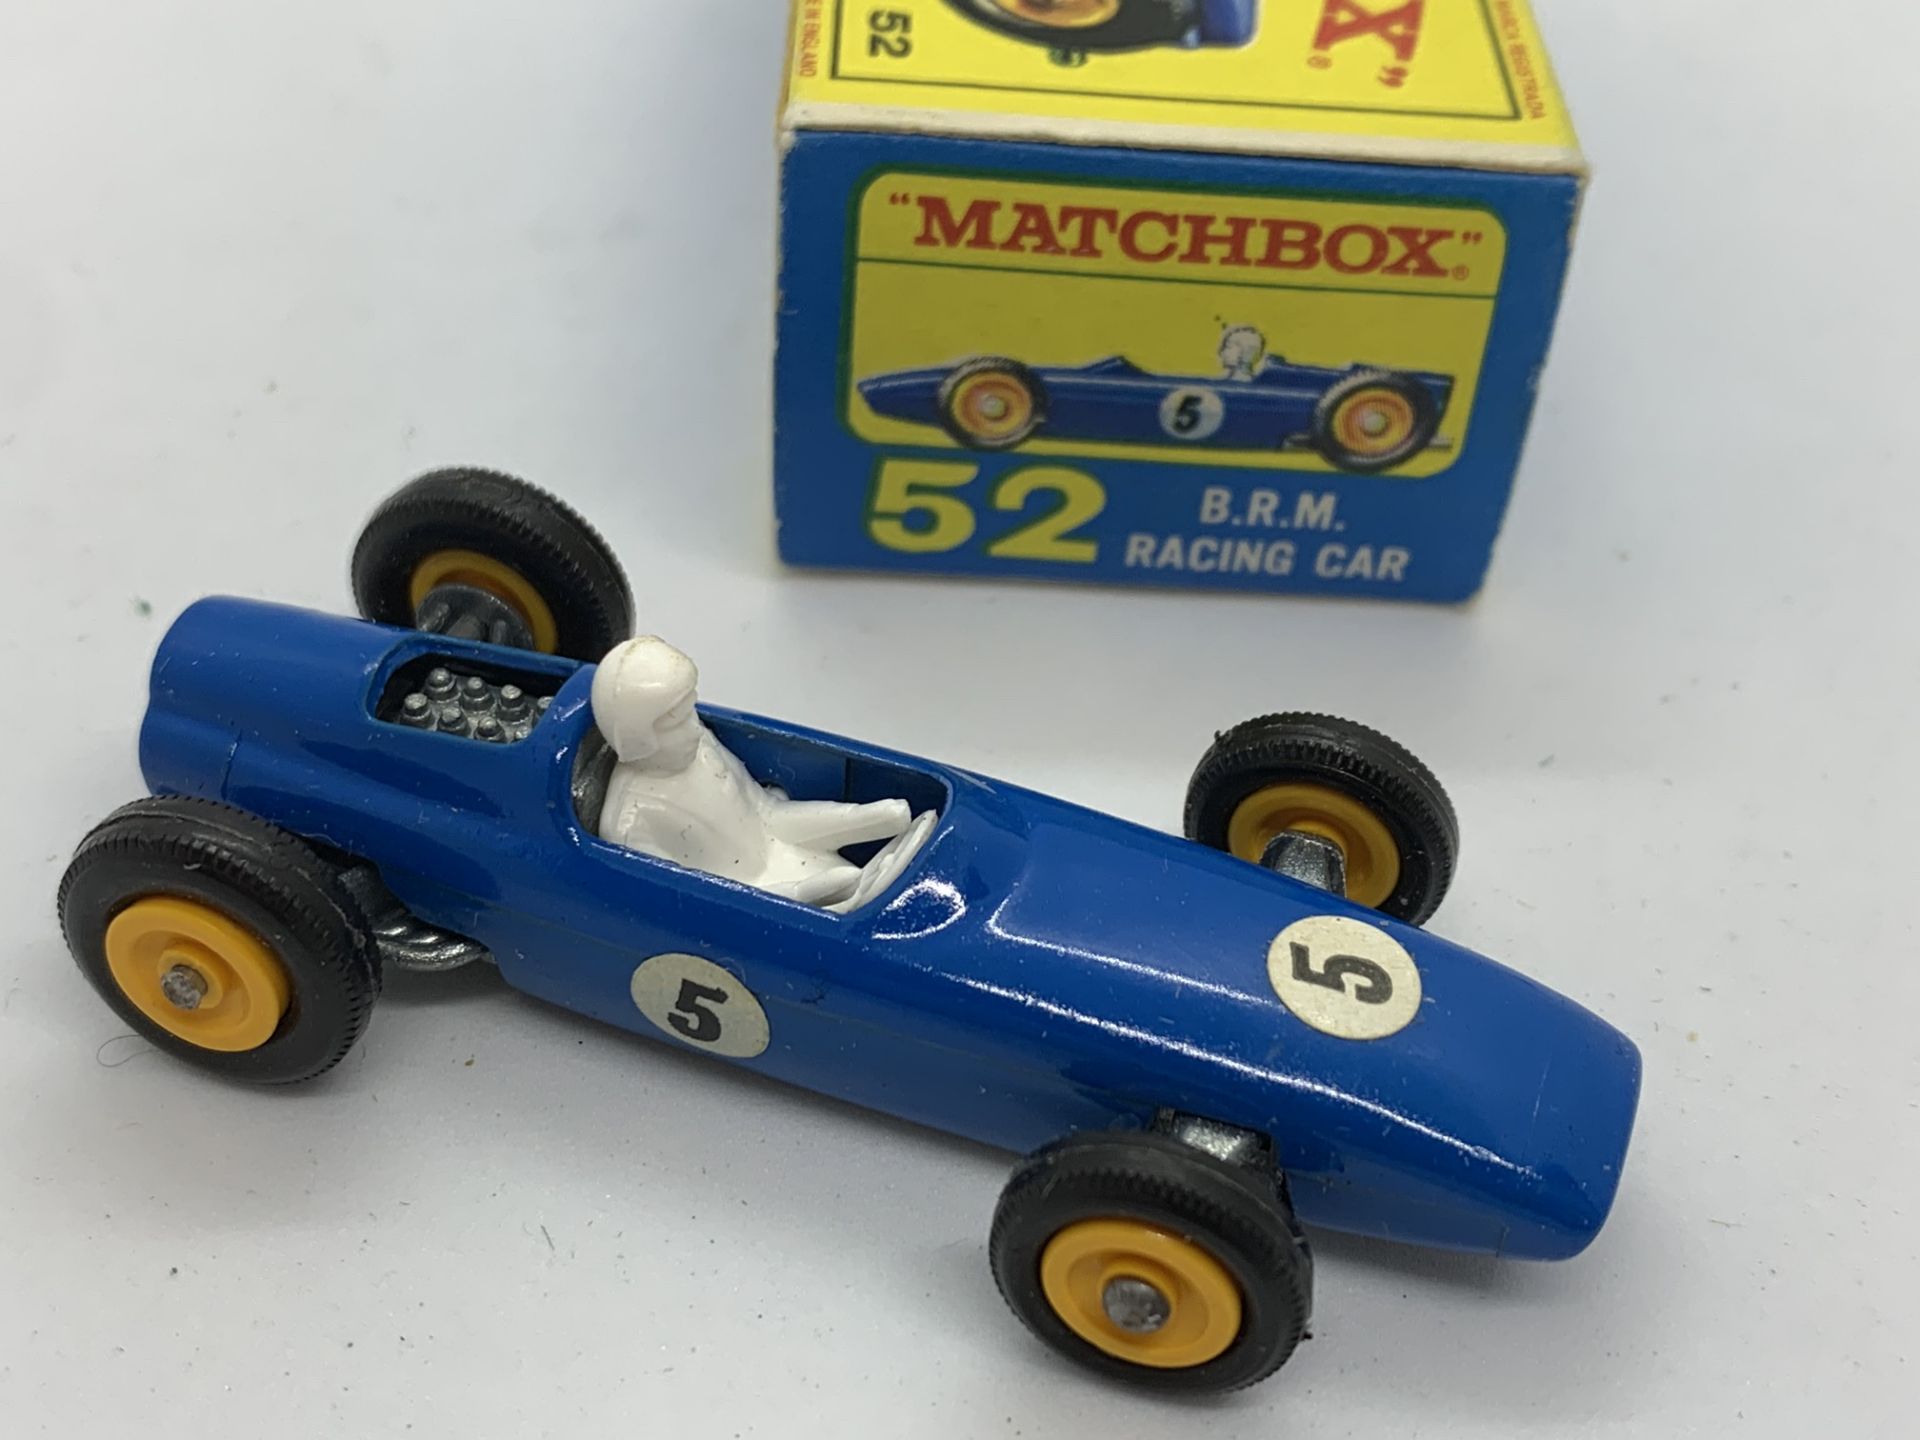 MATCHBOX B.R.M RACING CAR NO 52 WITH ORIGINAL BOX - NO RESERVE - Image 6 of 7